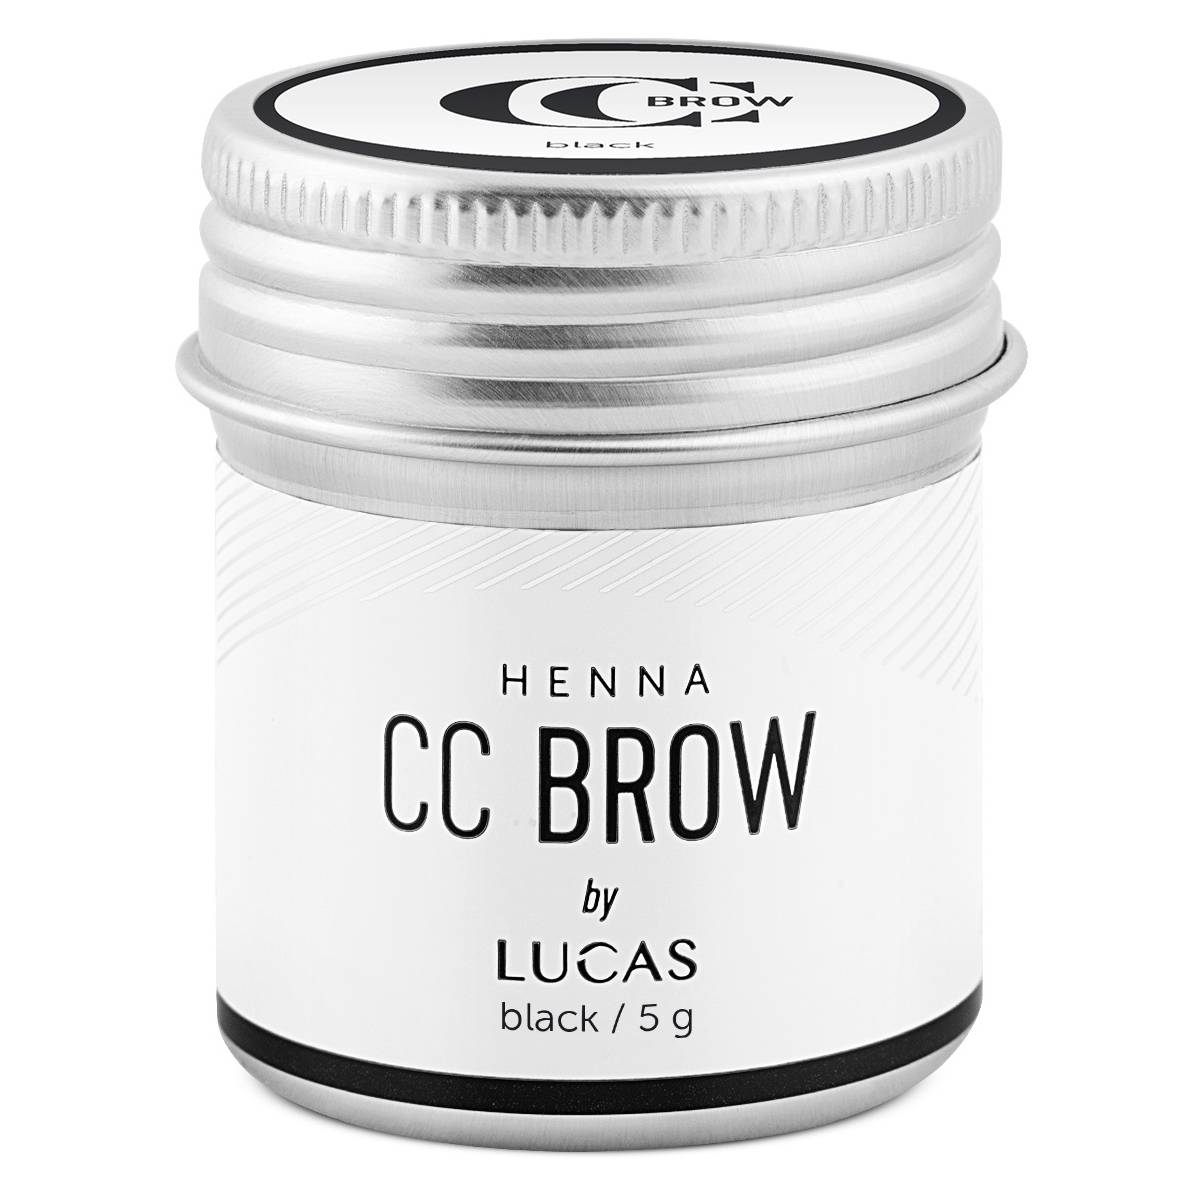 Lucas Cosmetics Хна для бровей Henna черная, 5 г (Lucas Cosmetics, CC Brow) хна для бровей lucas cosmetics cc brow premium henna hd 5 г